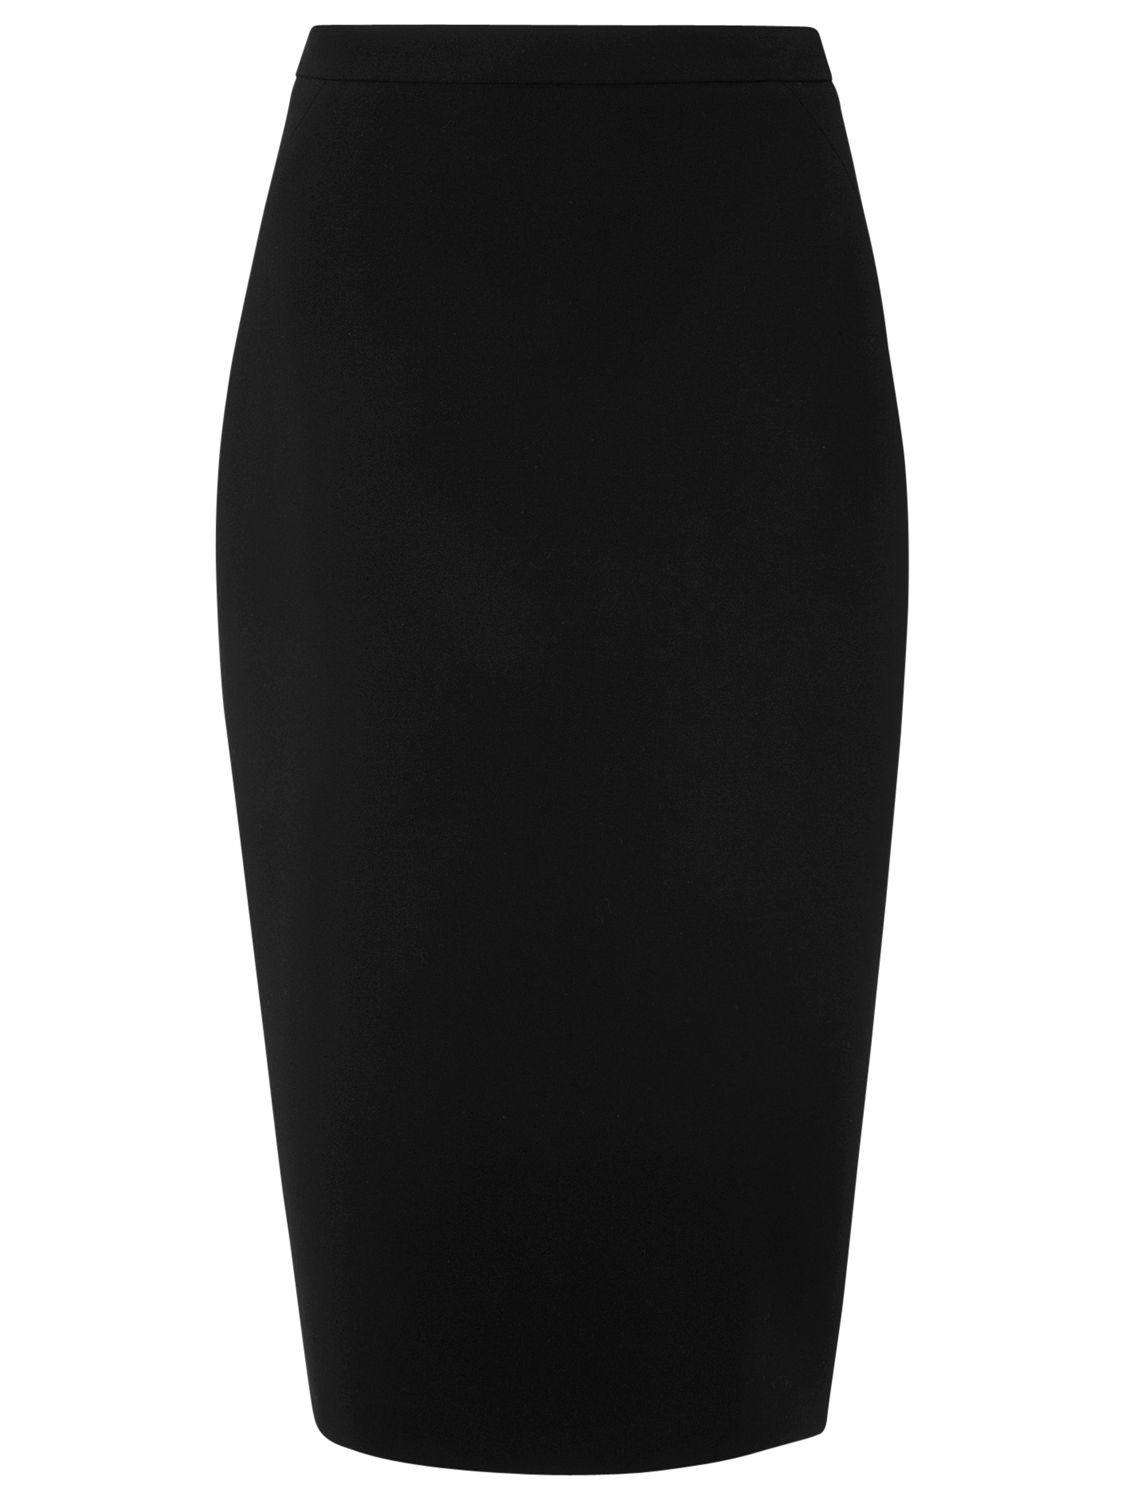 L.K.Bennett Judi Pencil Skirt, Black